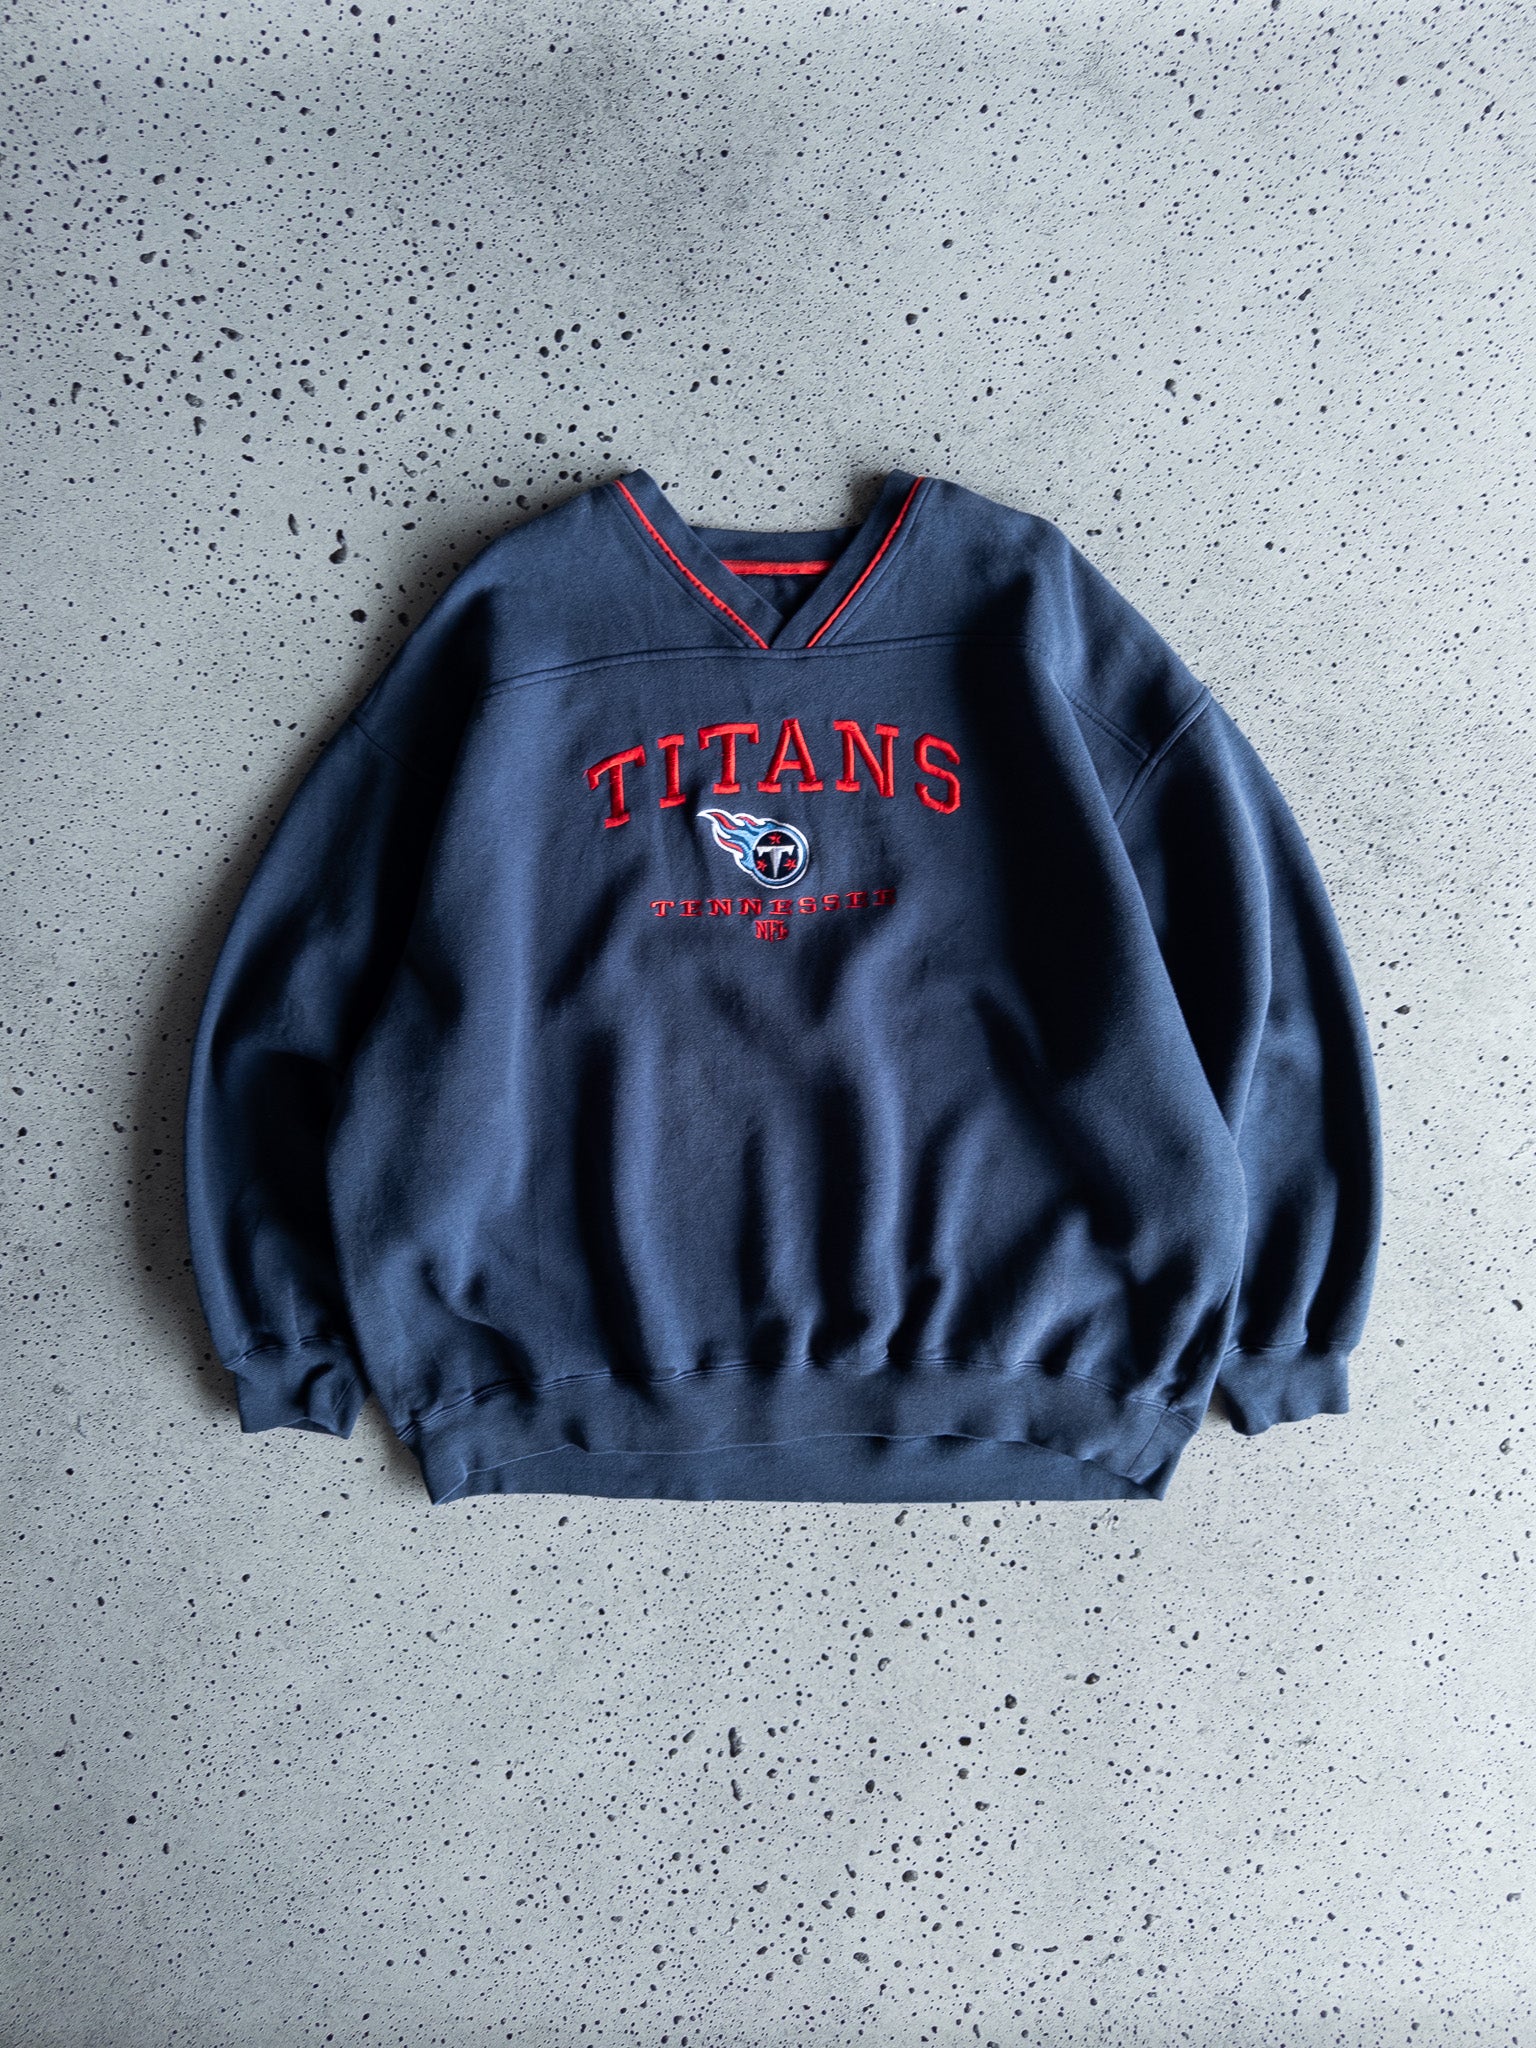 Vintage Tennessee Titans Sweatshirt (XL)